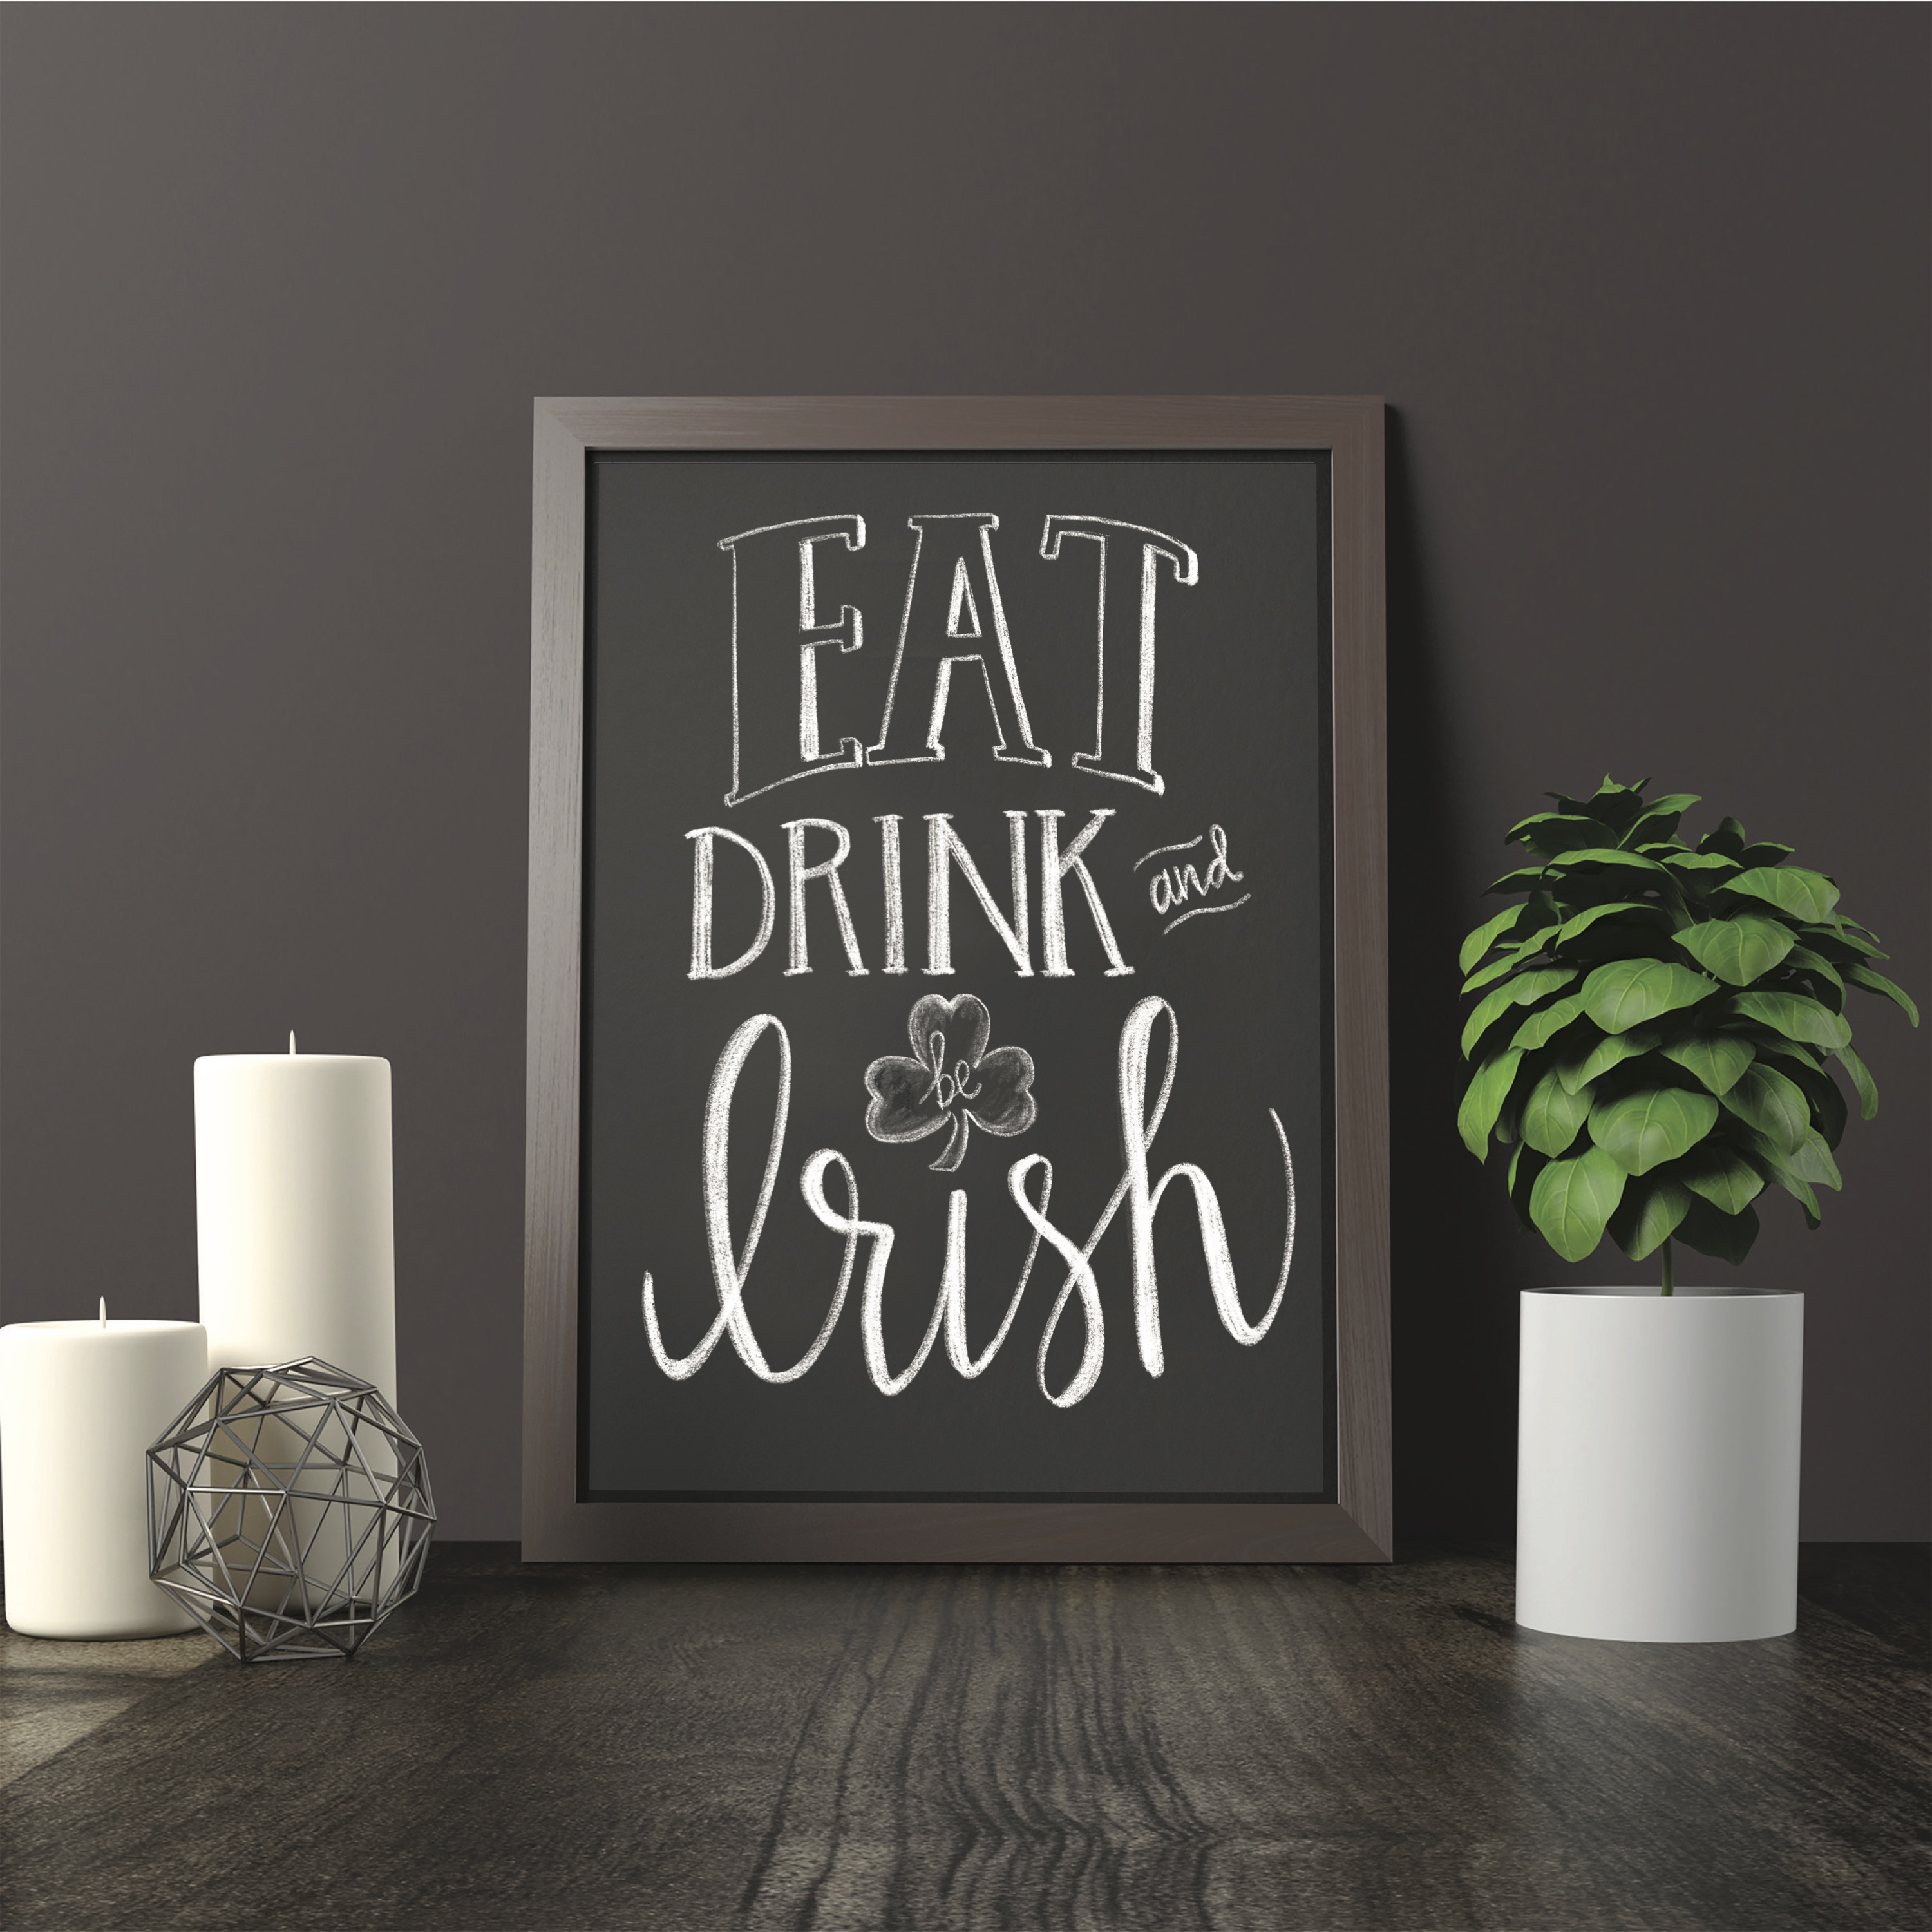 Eat Drink and Be Irish #StPatricksDay #BeIrish #HomeDecor